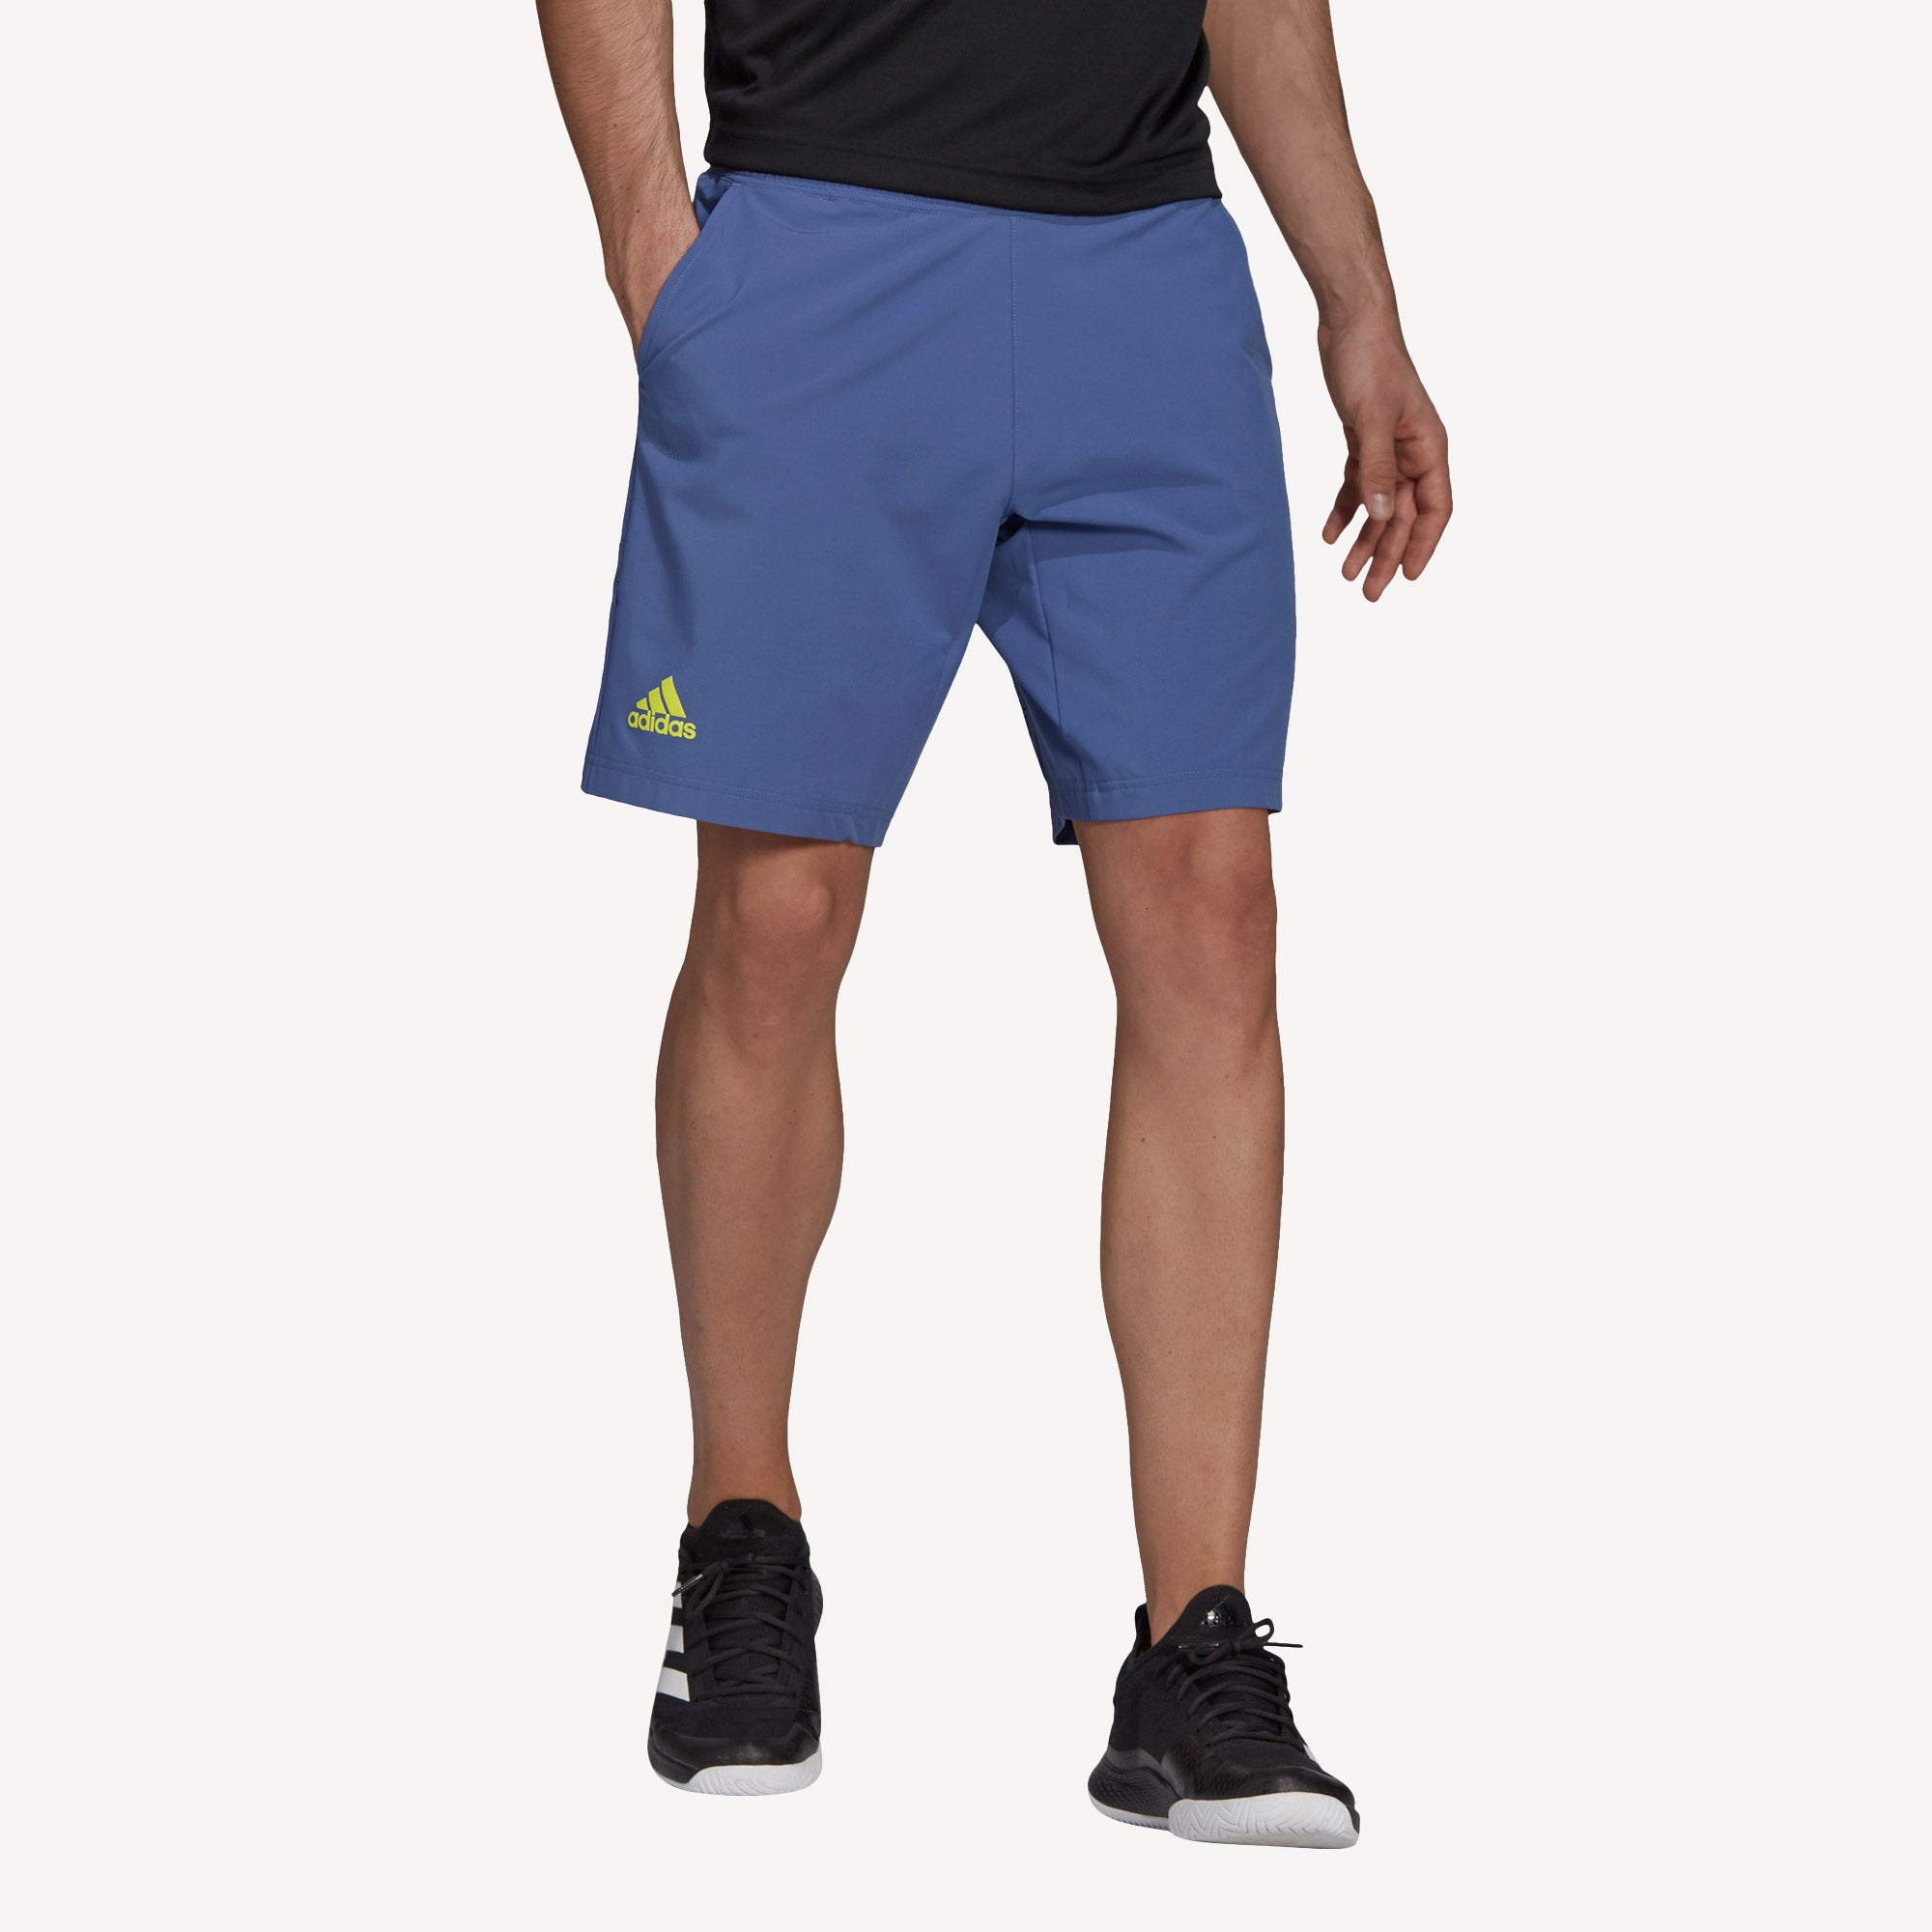 adidas Ergo Primeblue Men's 9-Inch Tennis Shorts Blue (1)